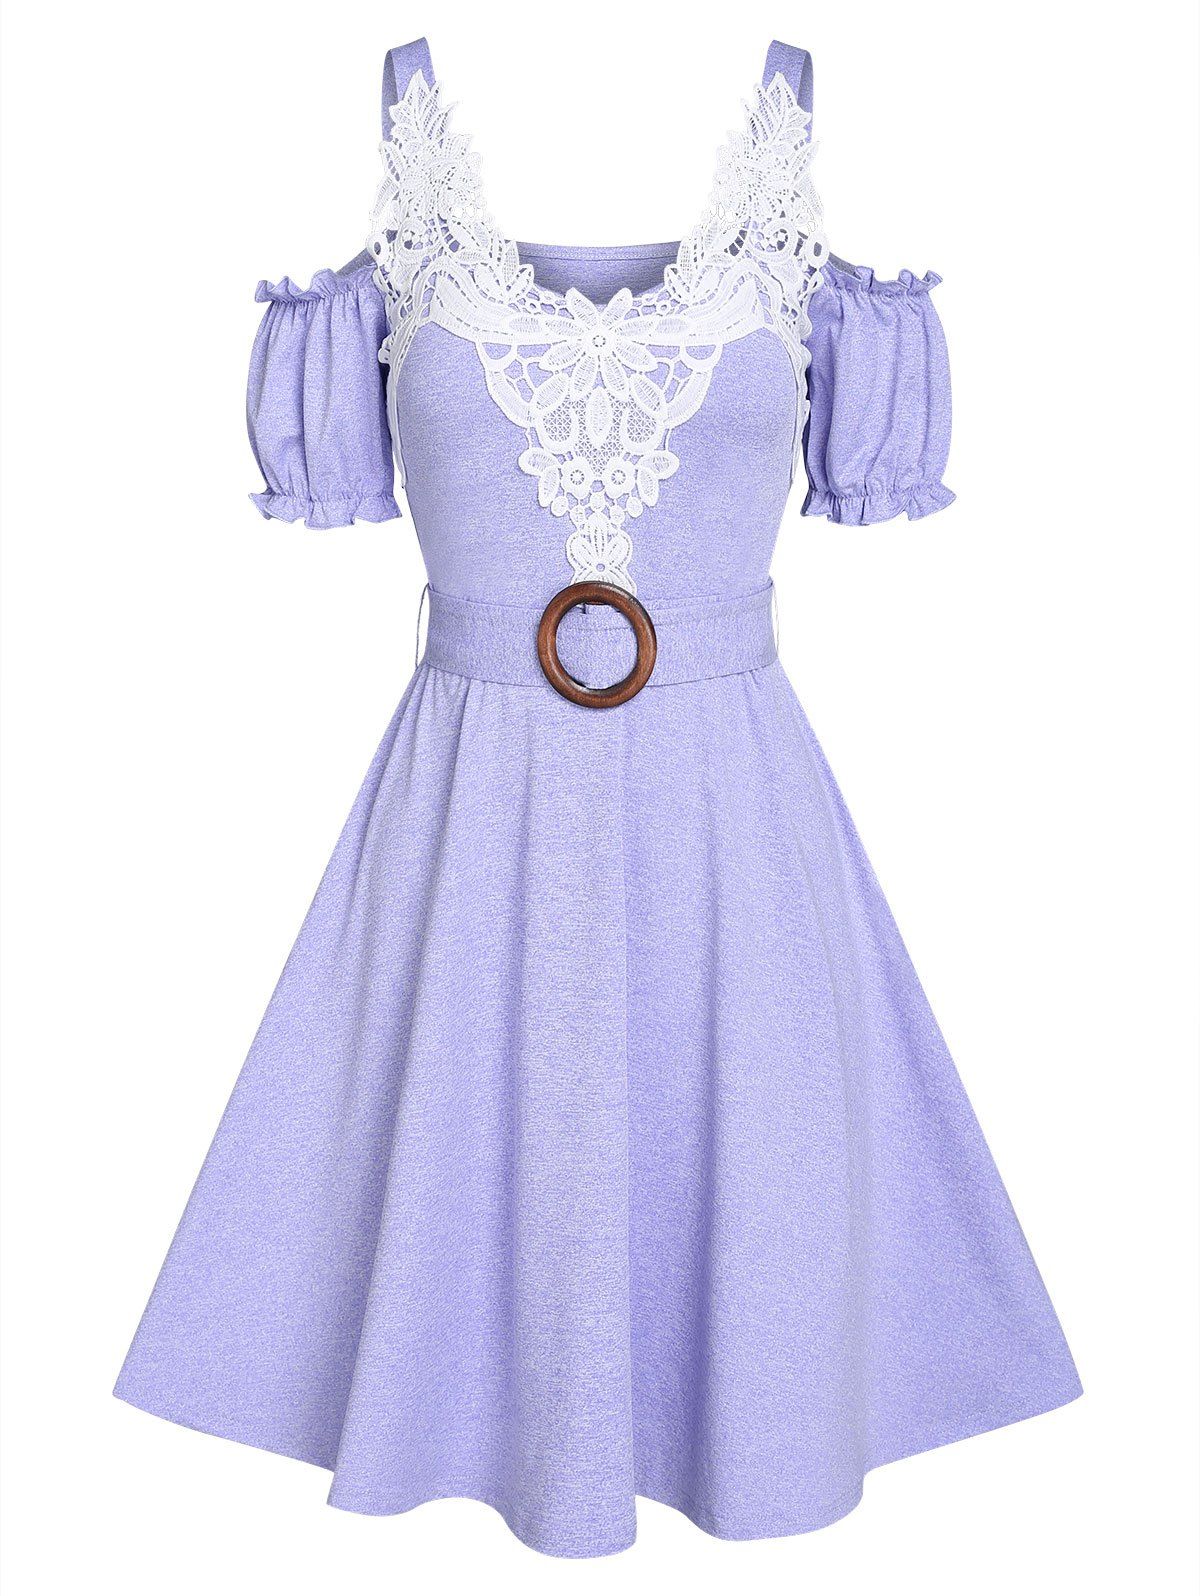 O Ring Flower Lace Cold Shoulder Dress - LIGHT PURPLE M